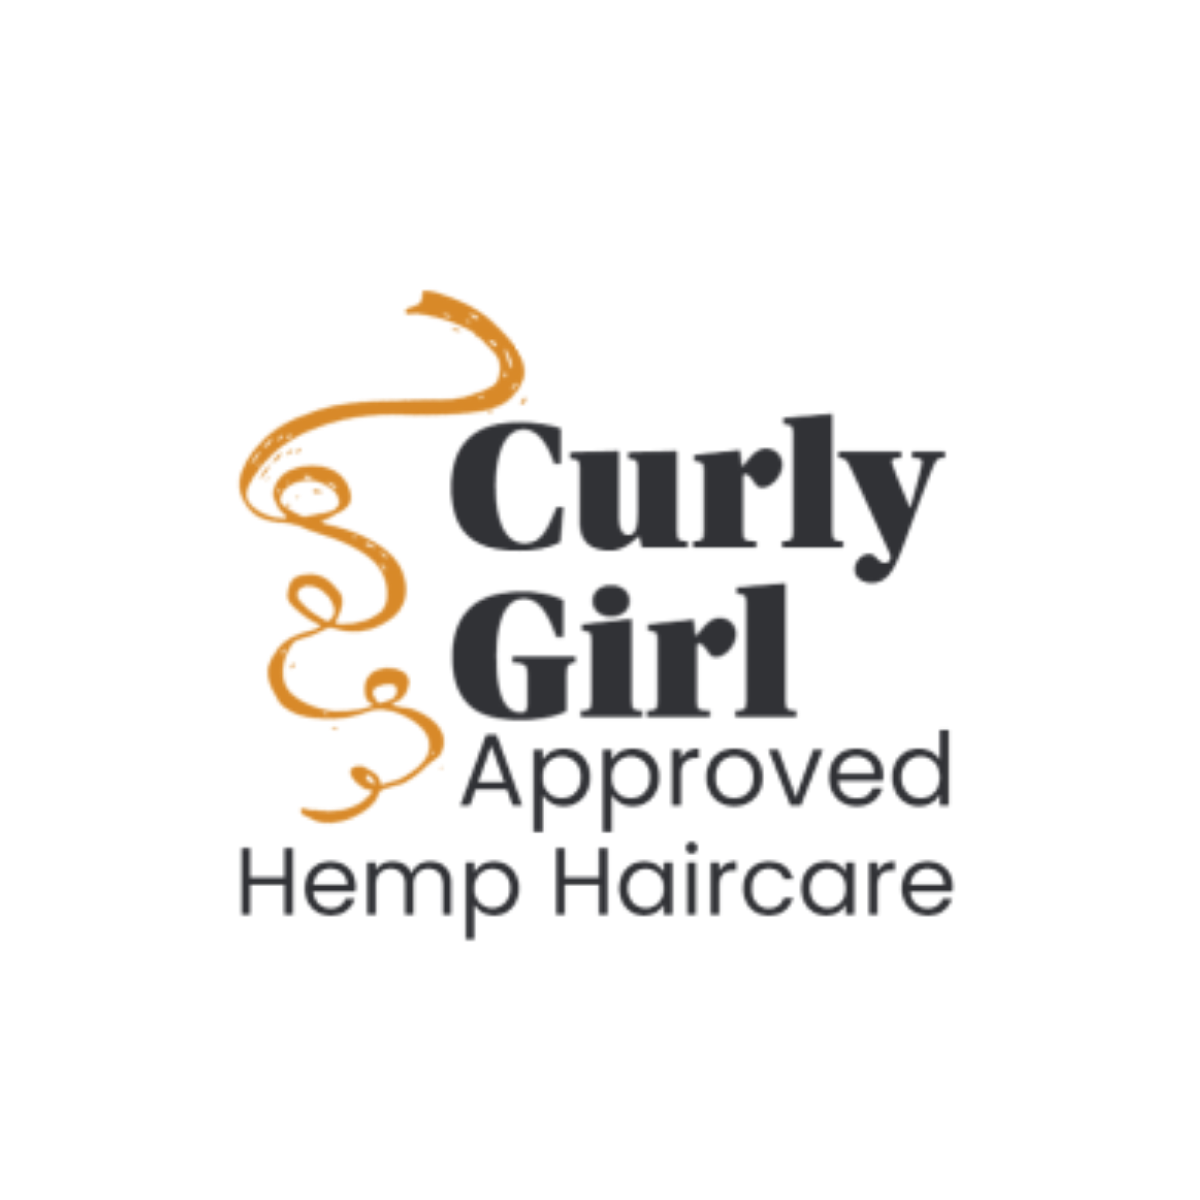 'Go Curly' Organic Hemp Shampoo & Conditioner 125ml (subscription box available)